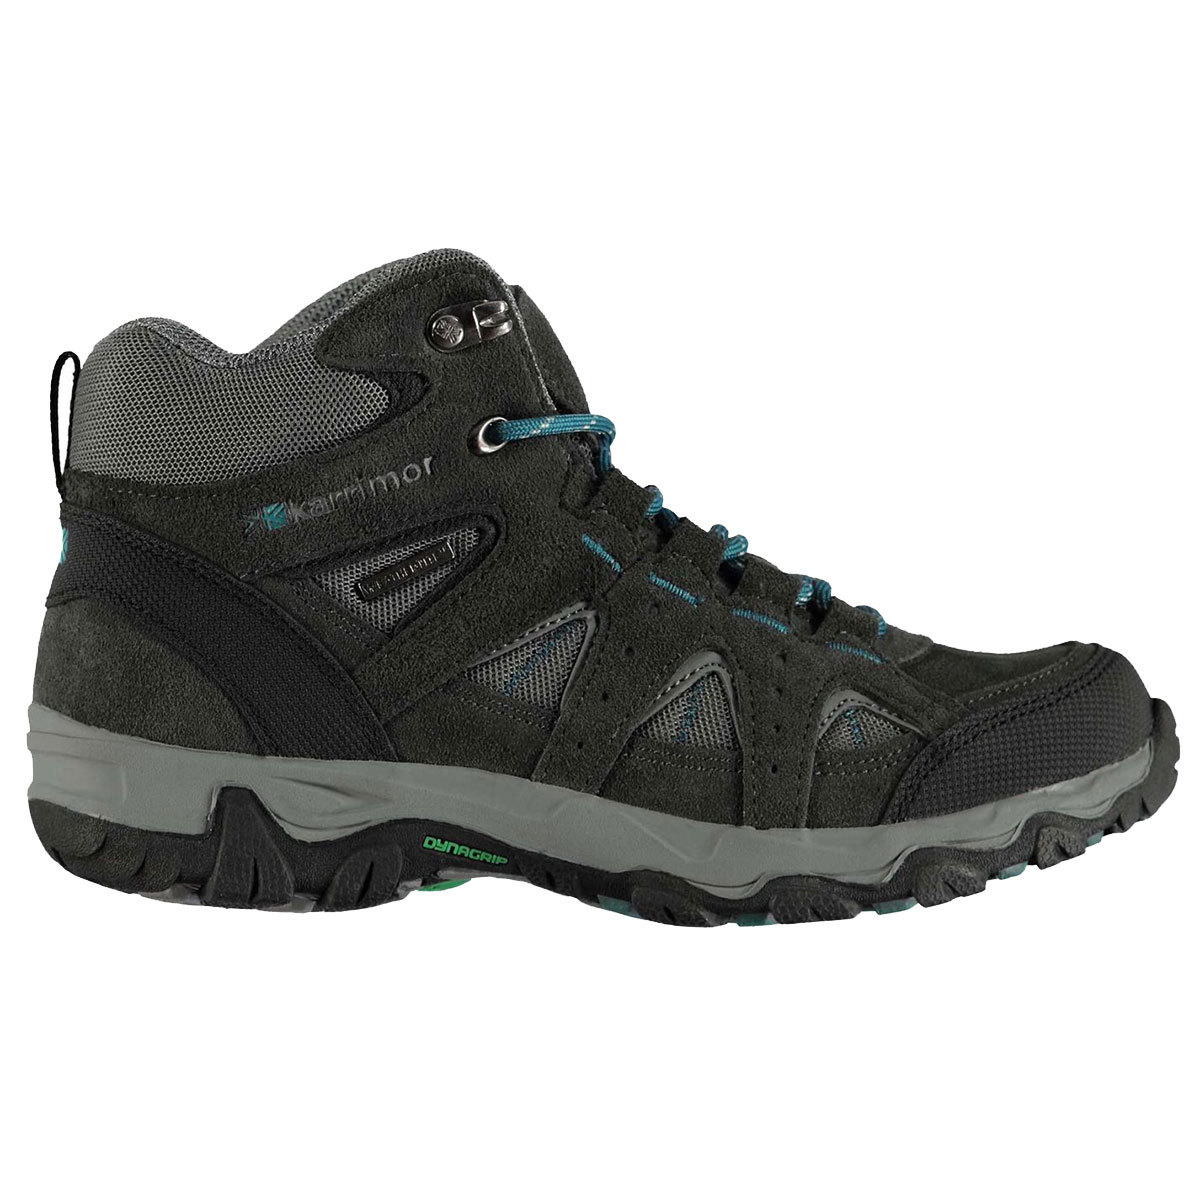 Karrimor Big Boys' Mount Mid Waterproof Hiking Shoes - Black, 6.5